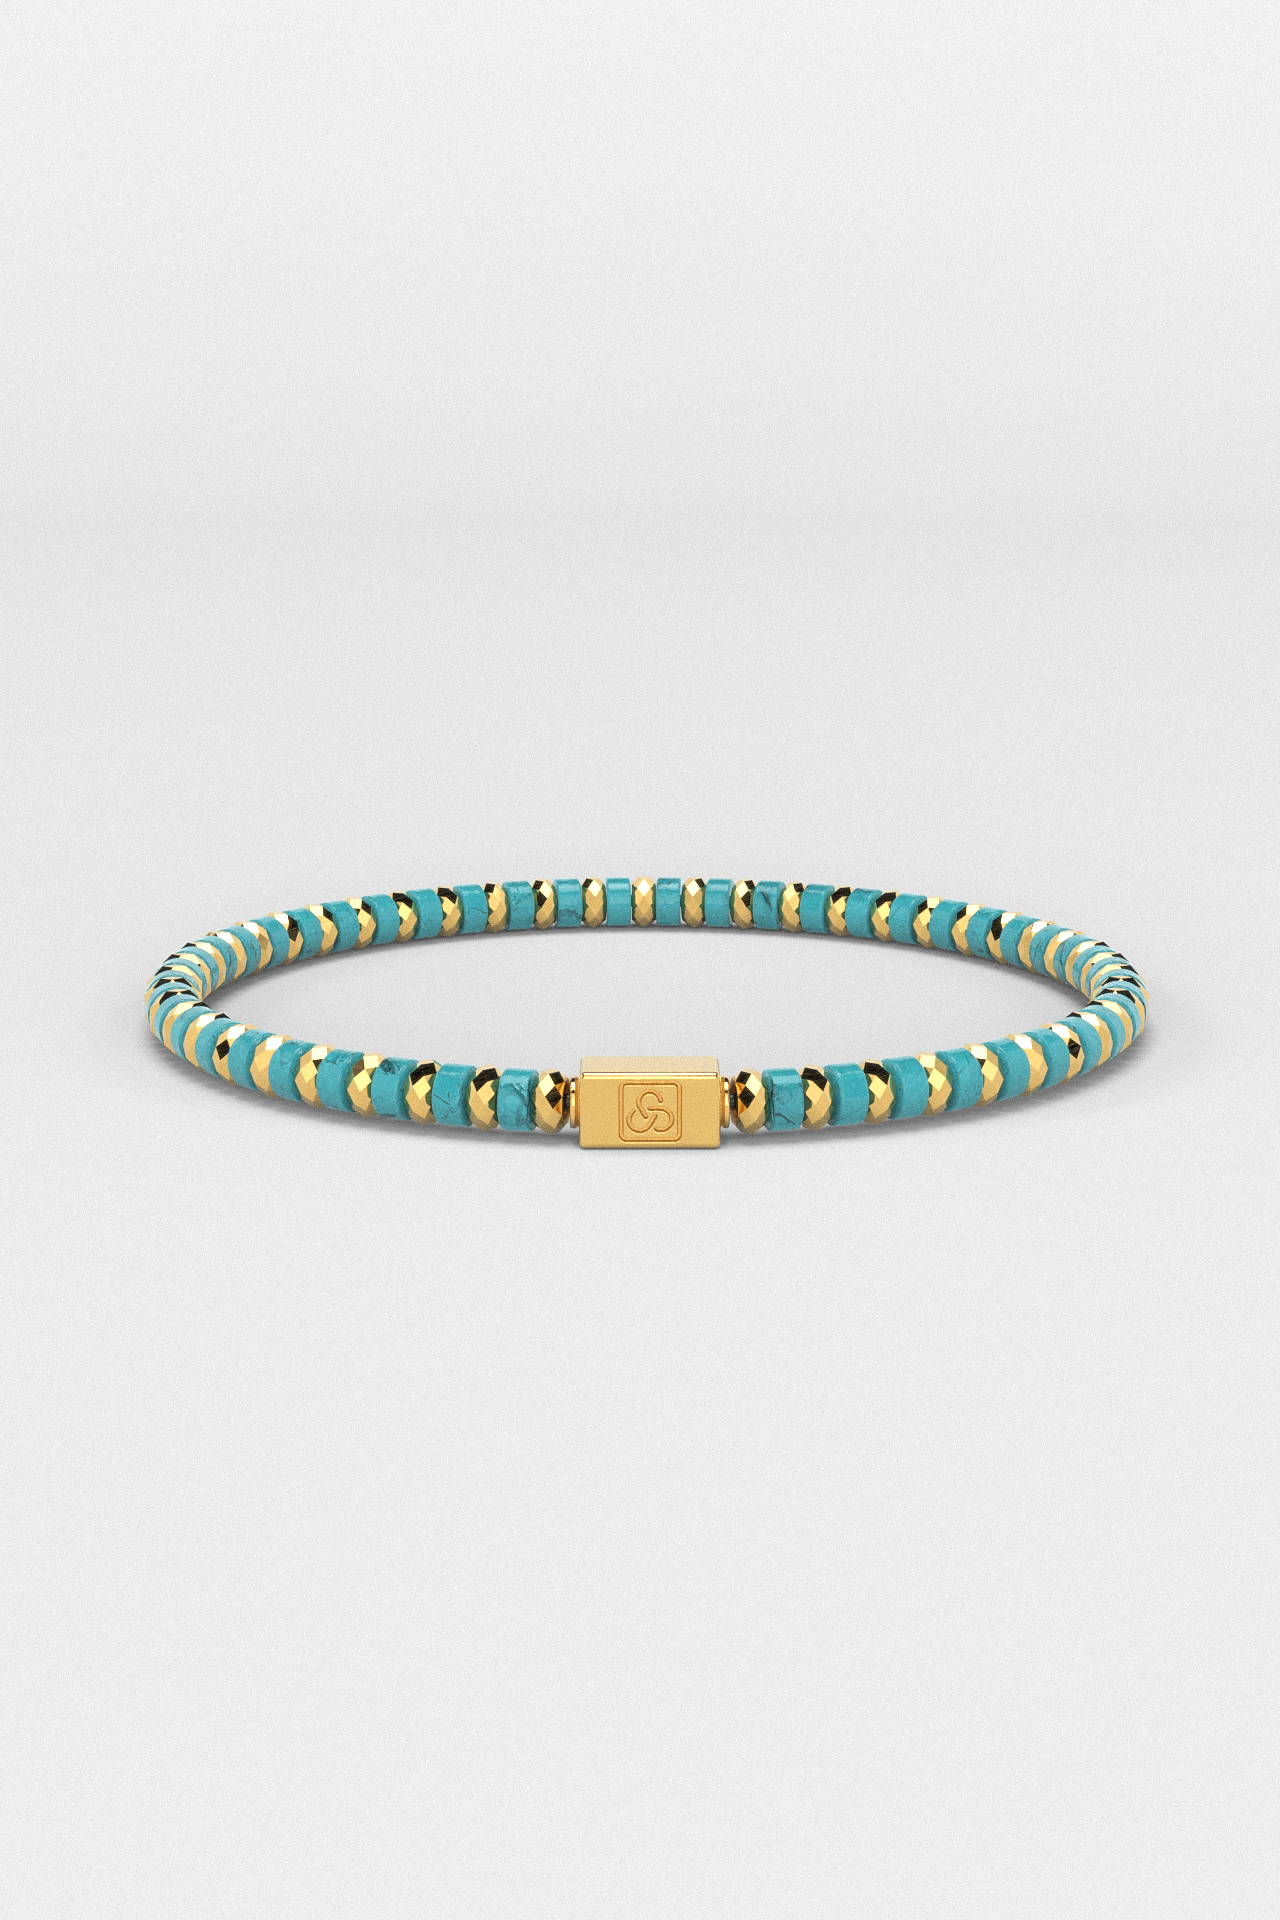 Turquoise Bracelet 4mm | Spacer